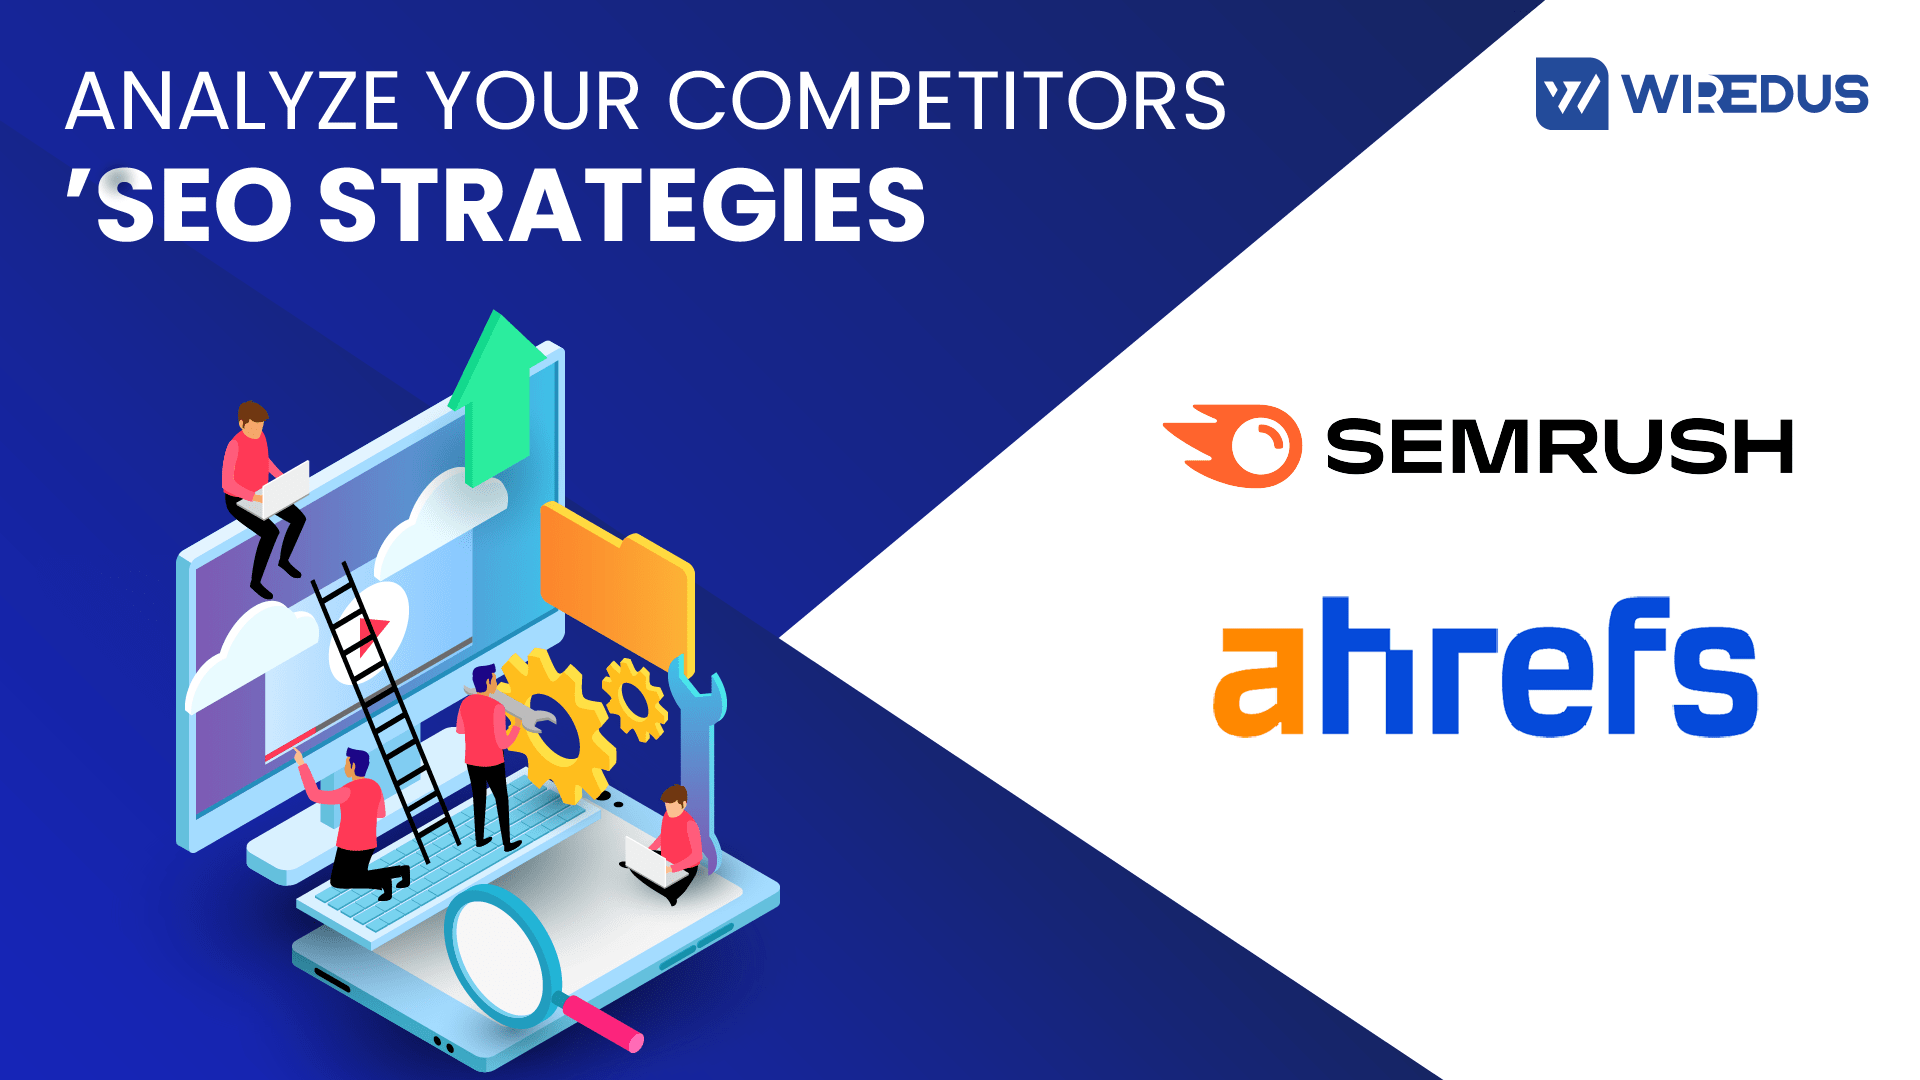 seo competitor analysis